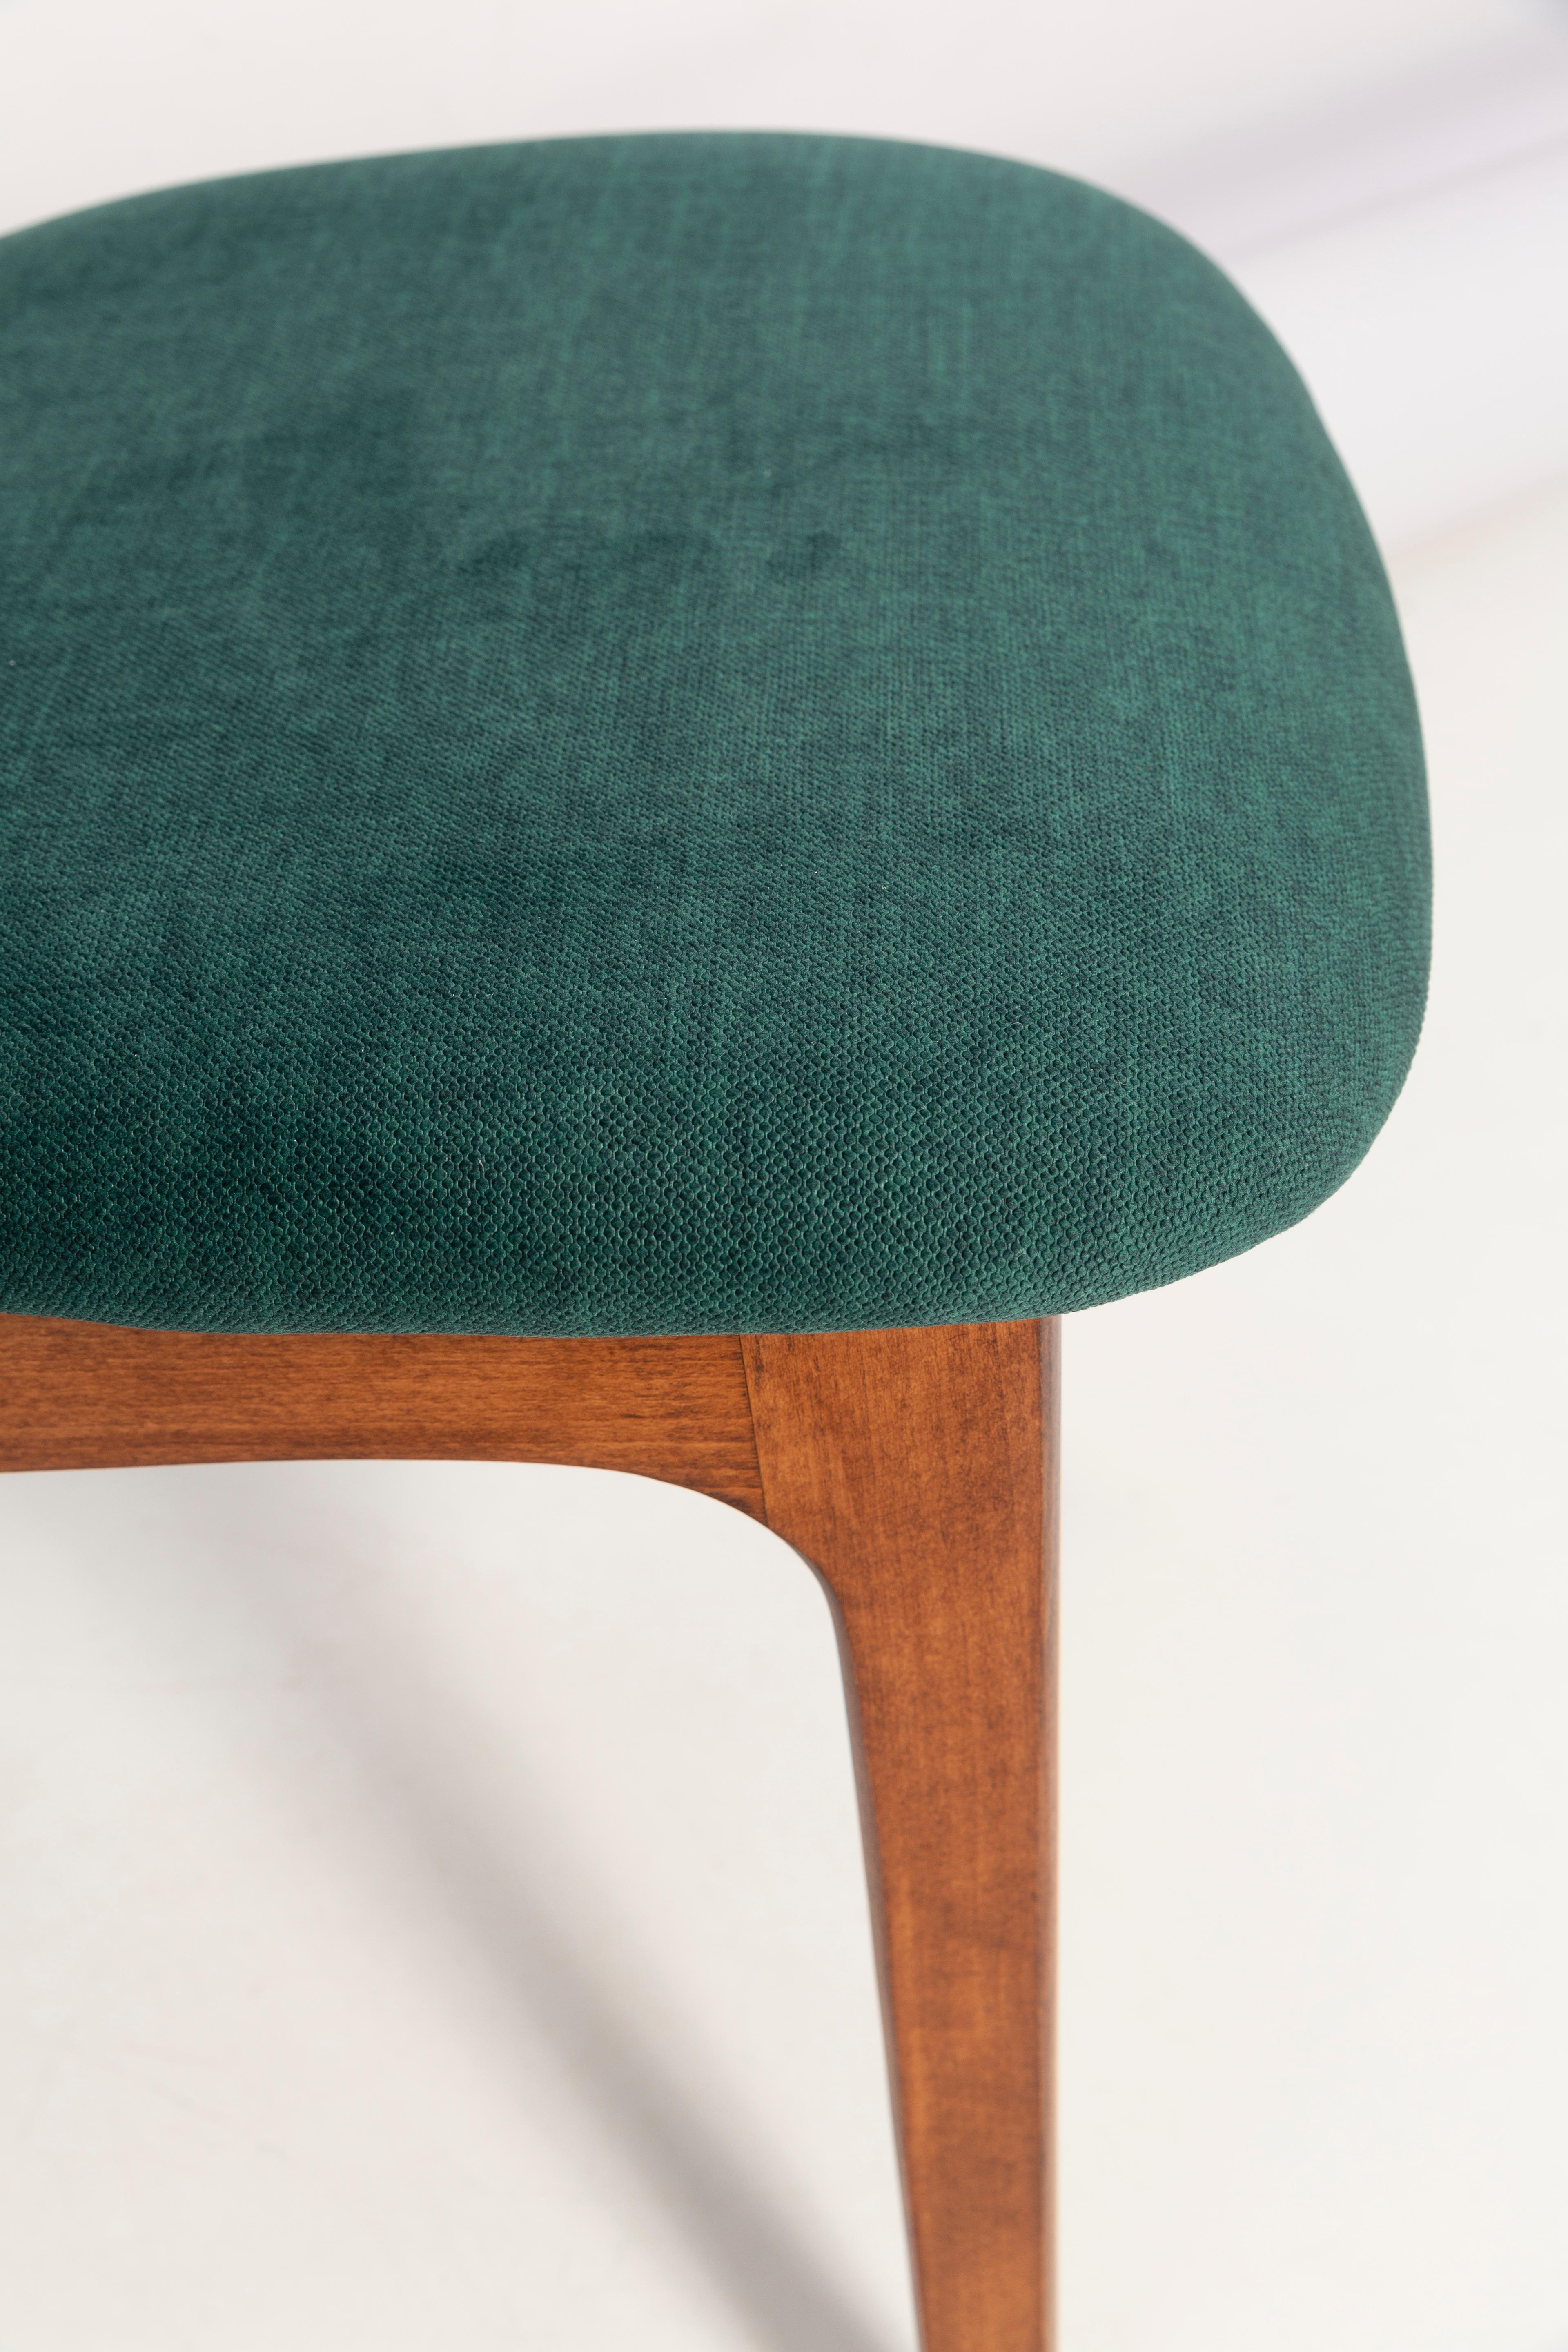 Hand-Crafted Mid Century Green Velvet Chair Designed by Rajmund Halas, Poland, 1960s For Sale